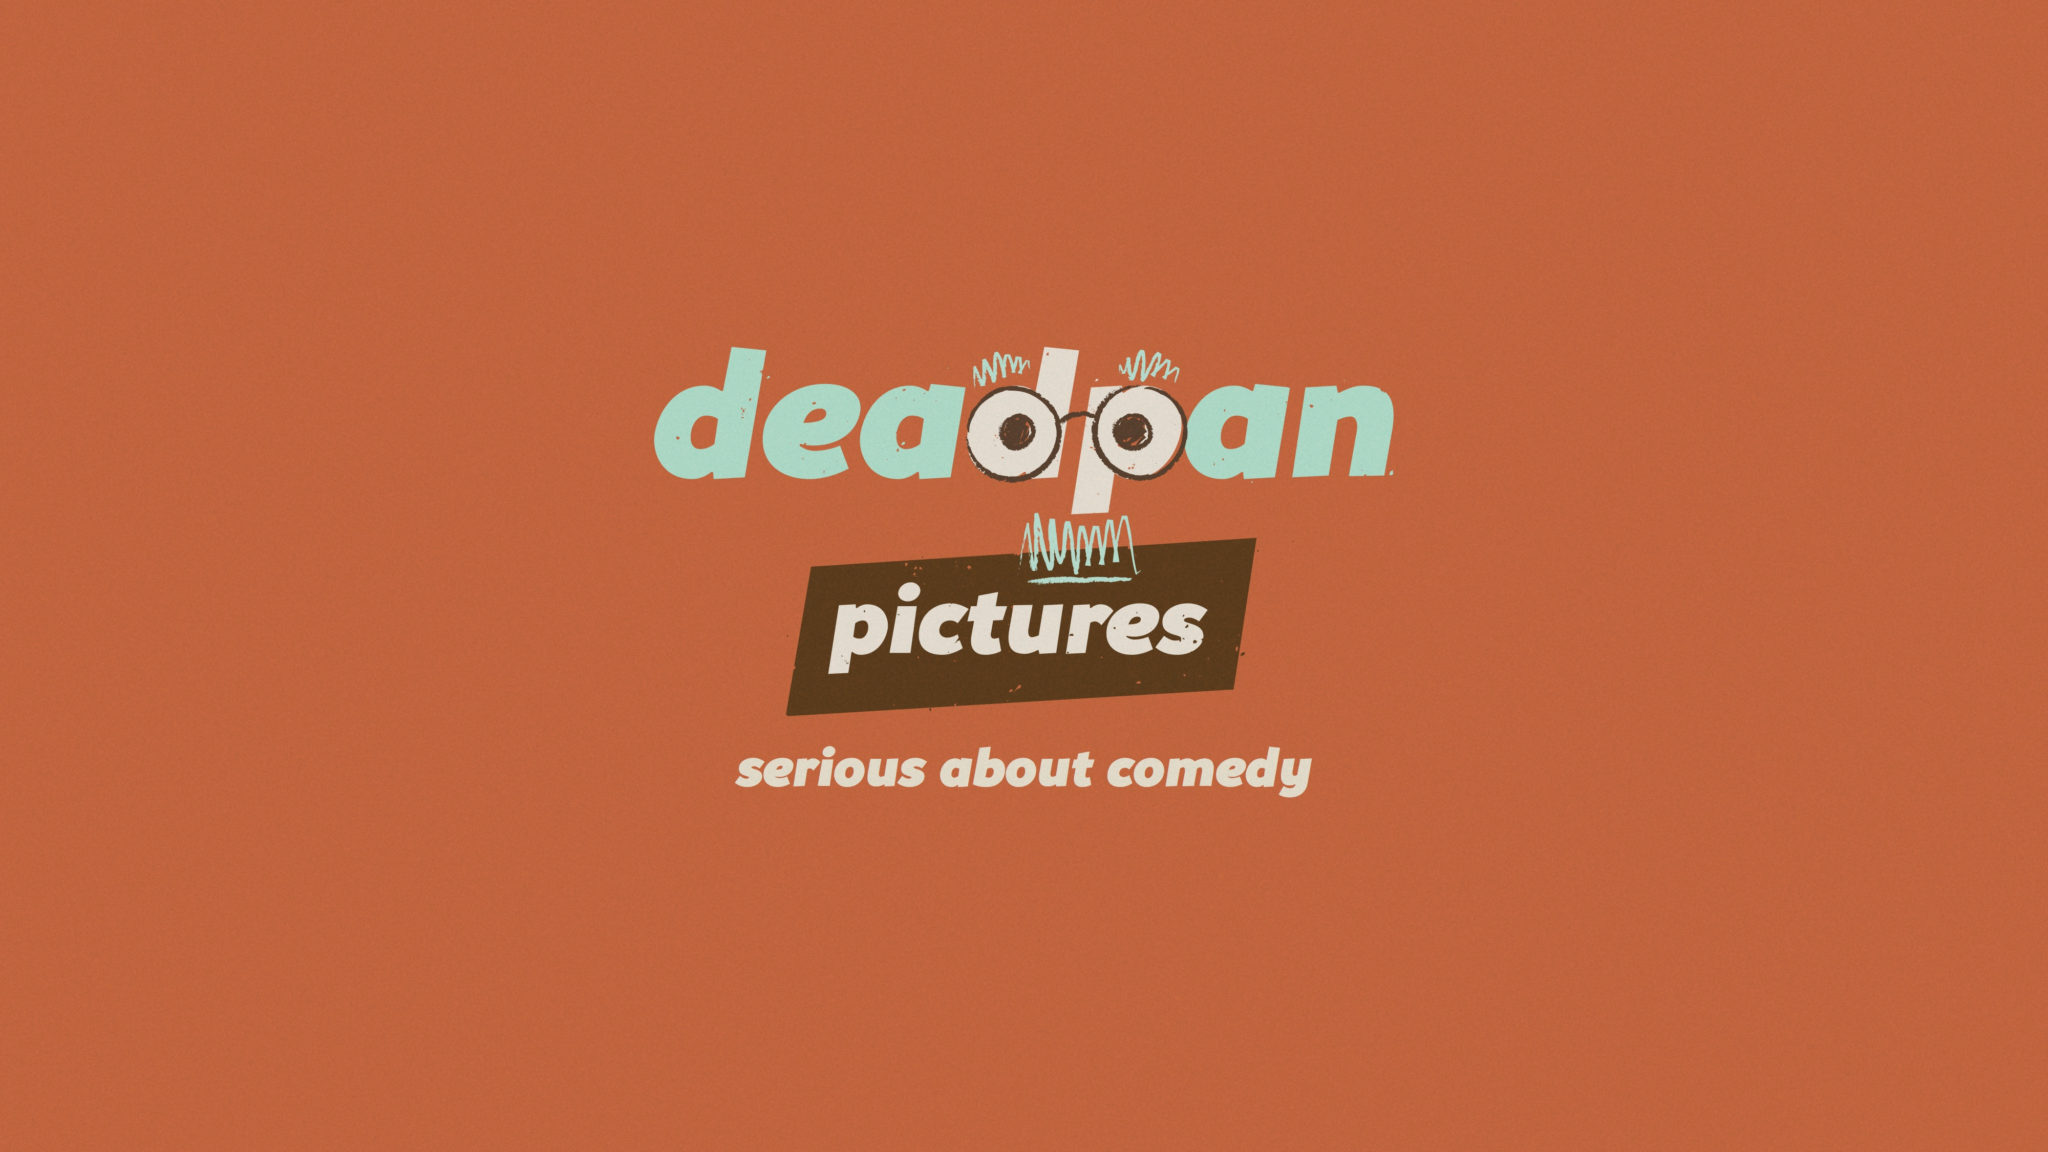 Deadpan Pictures